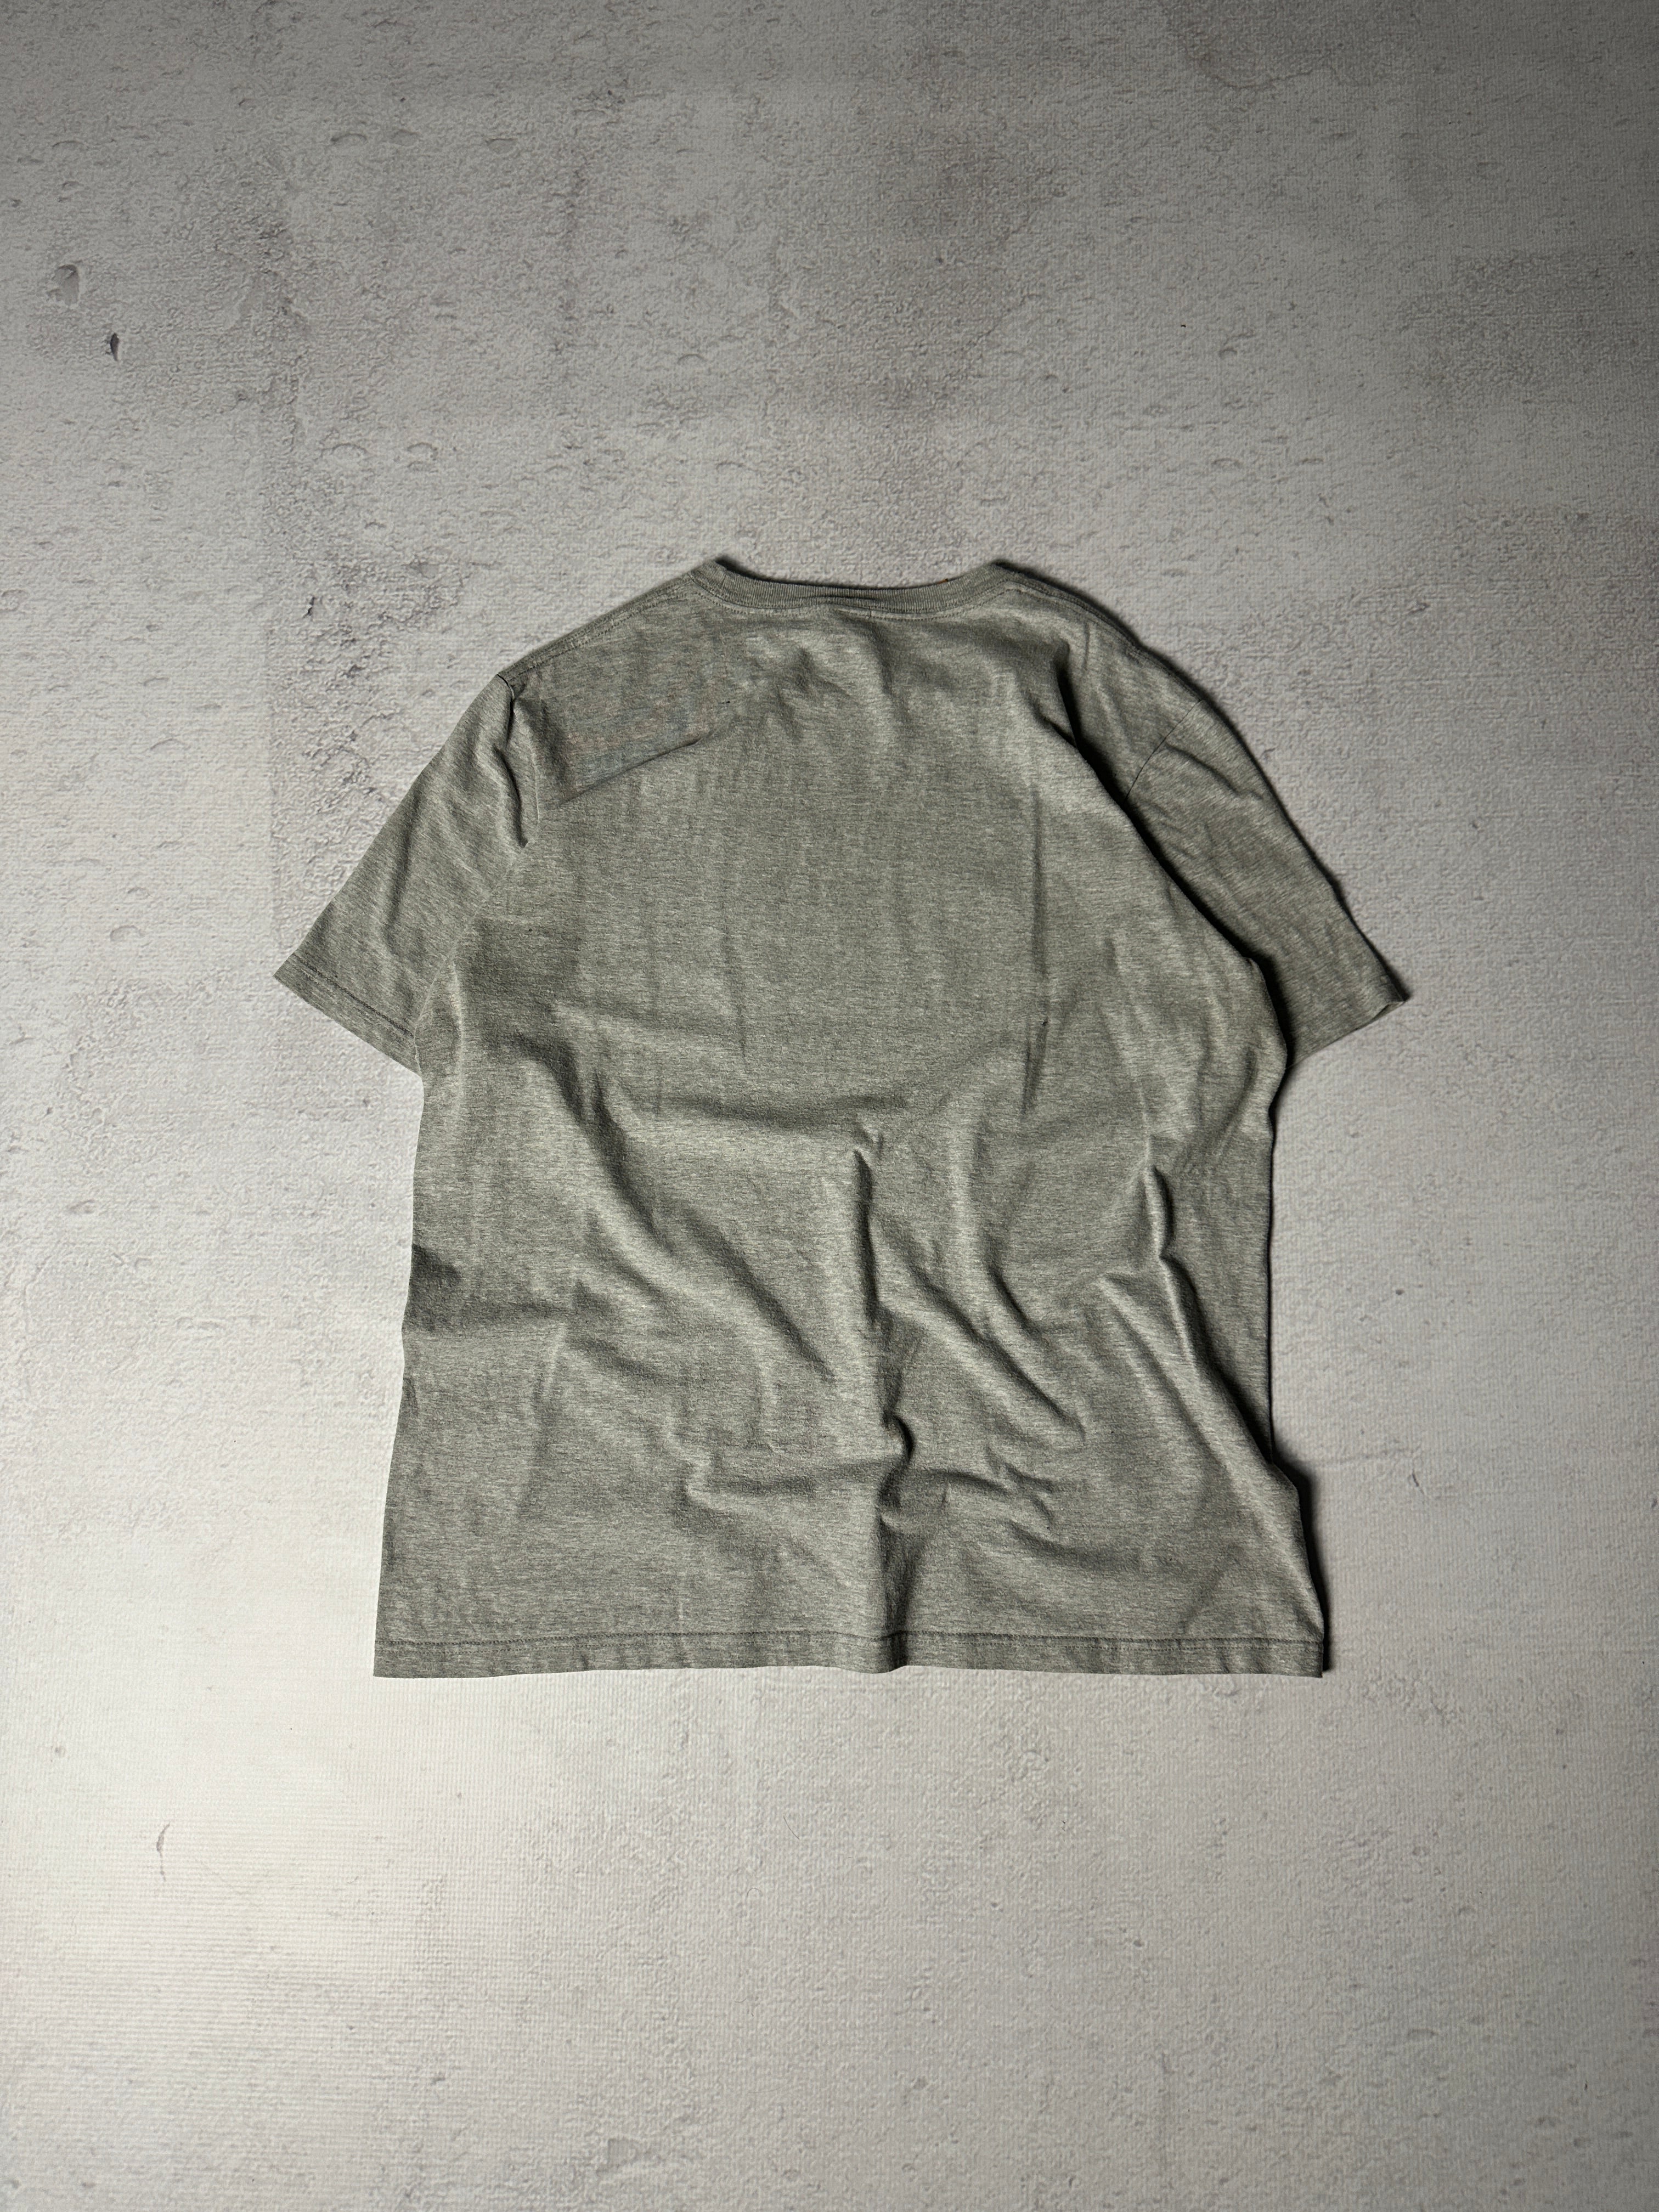 Vintage The North Face Graphic T-Shirt - Men's XL